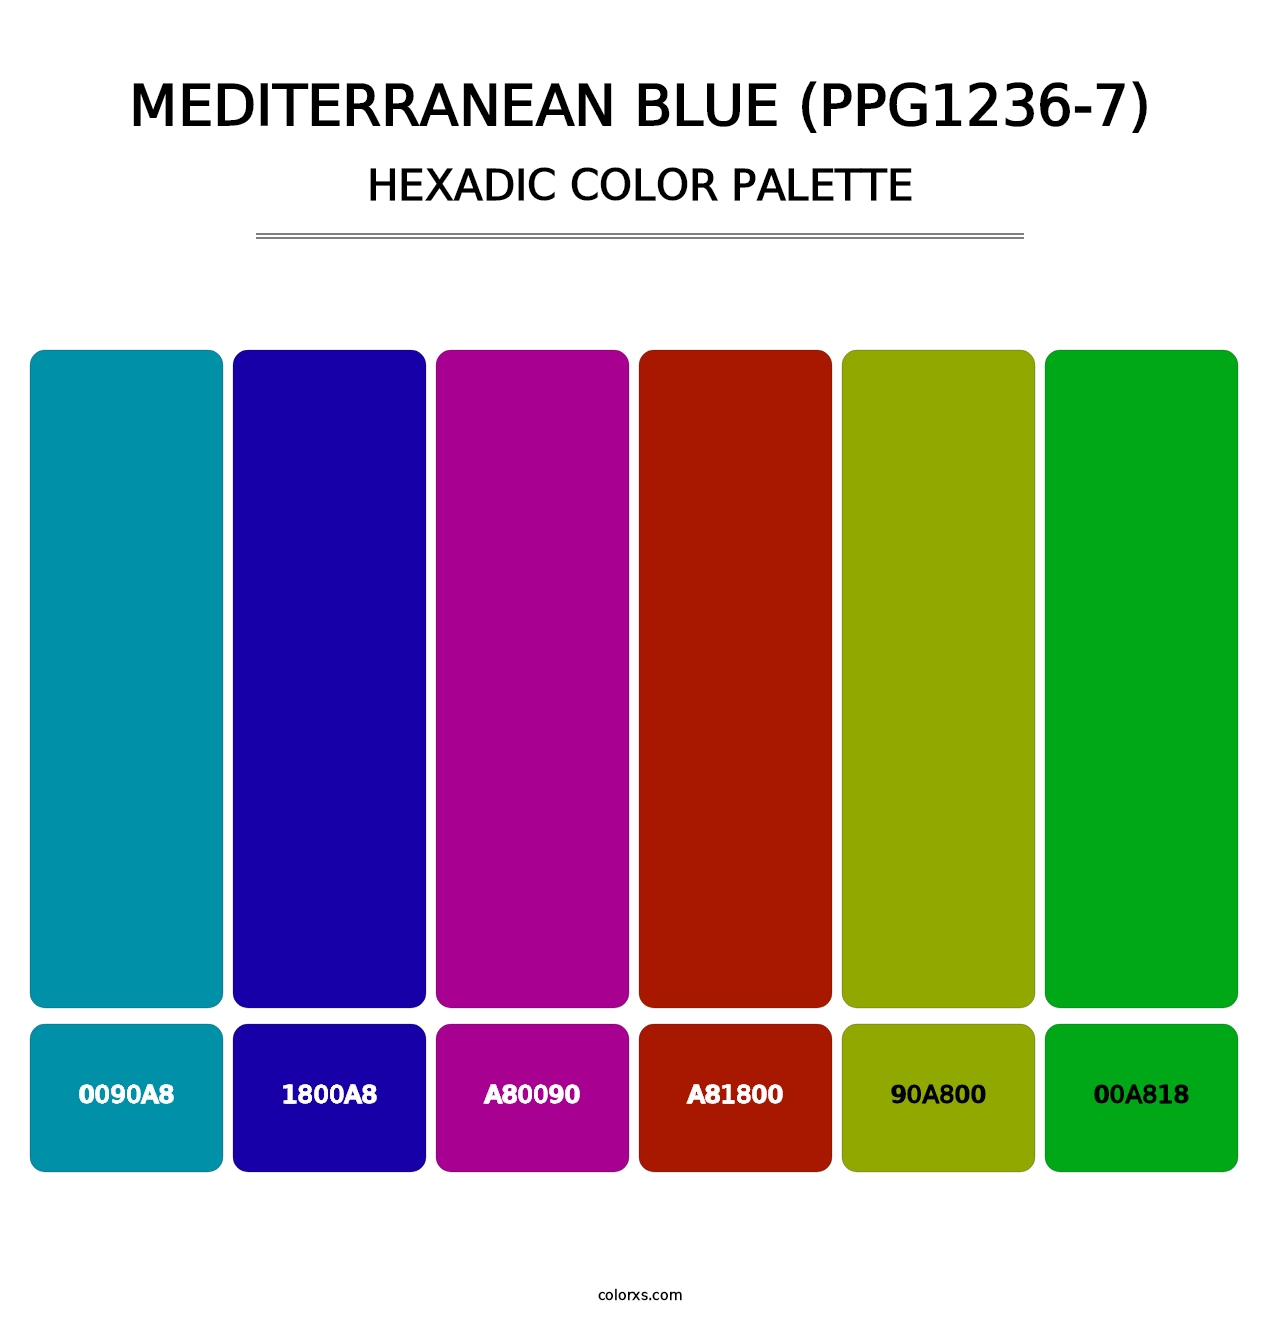 Mediterranean Blue (PPG1236-7) - Hexadic Color Palette